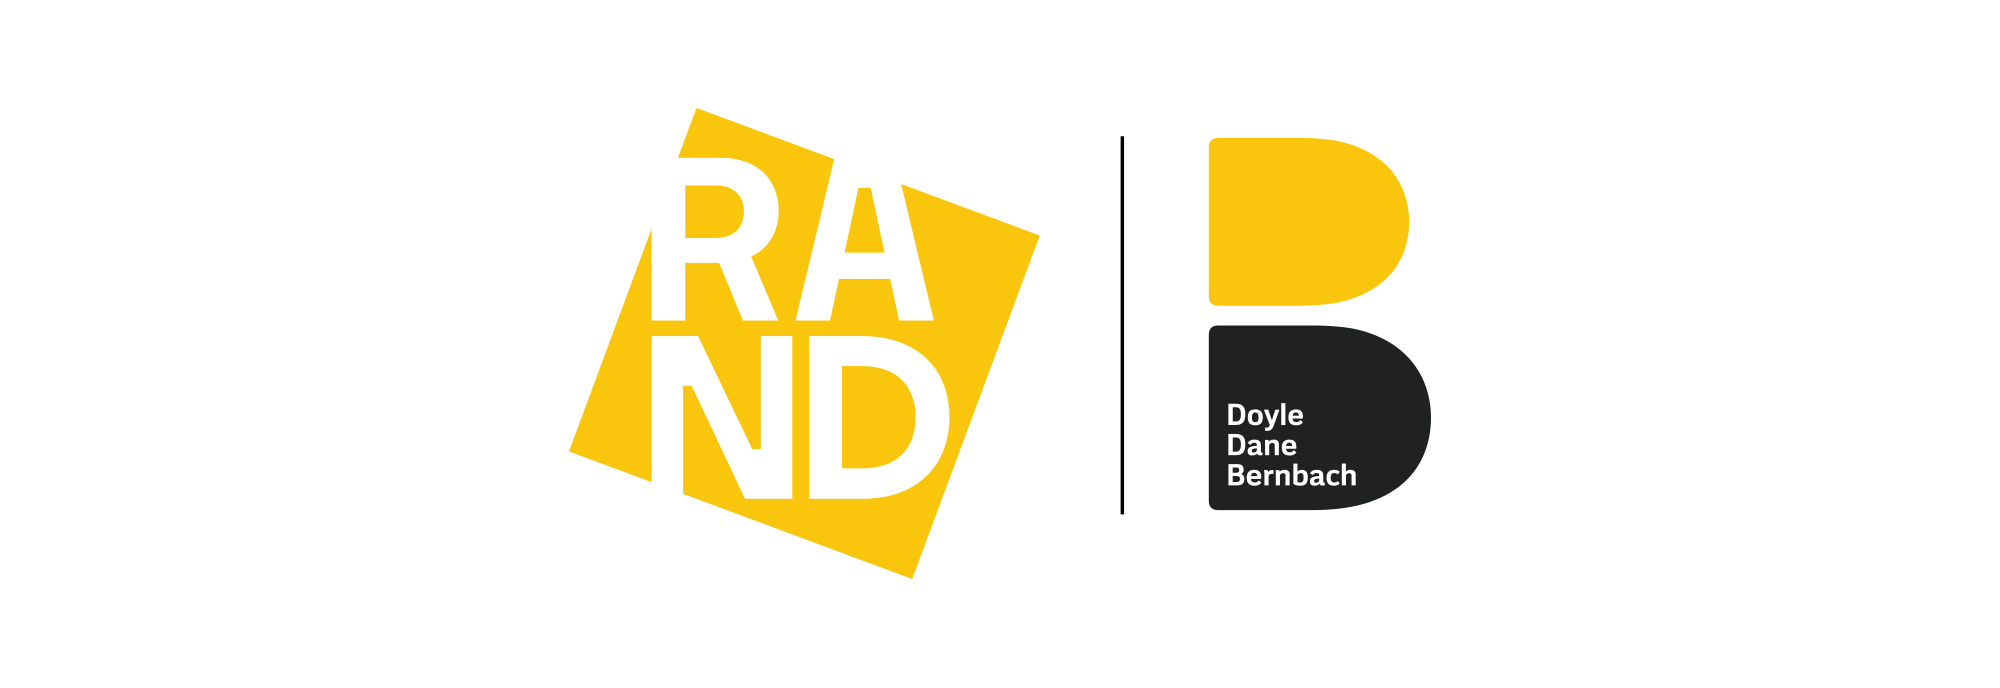 DDB Rand Logo Exploration 02